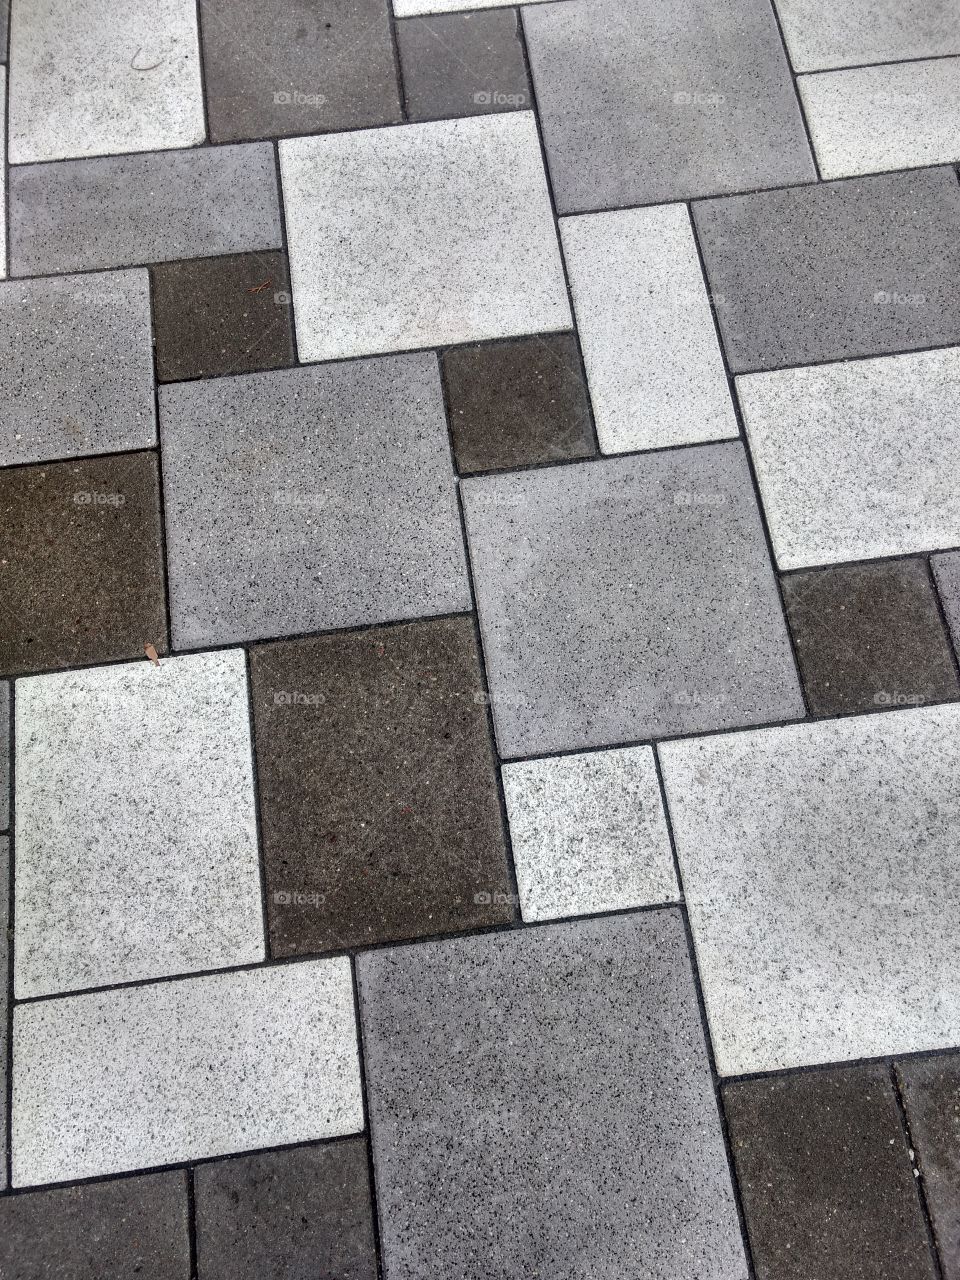 tiles fitting together